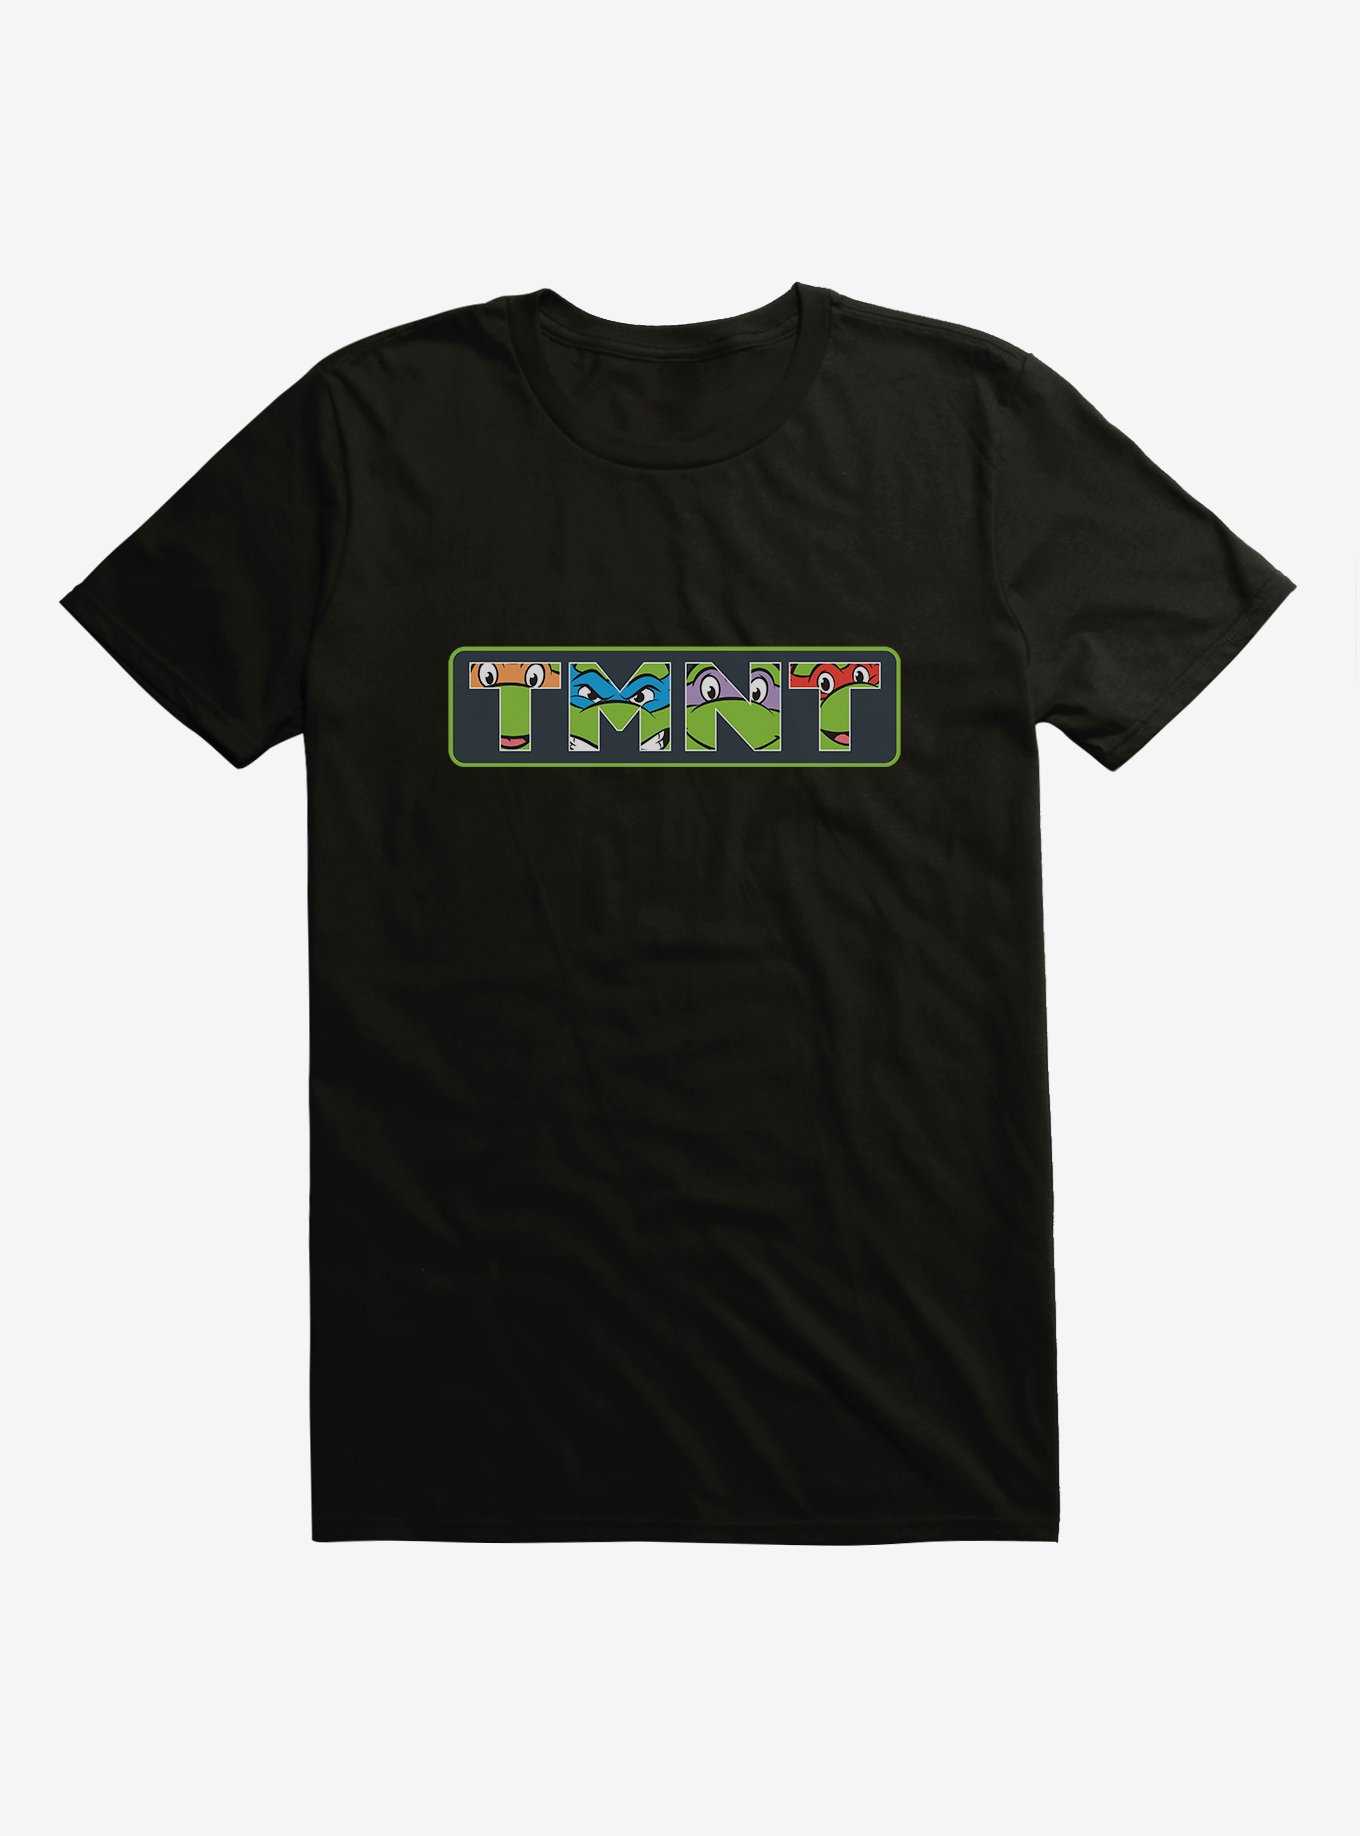 Teenage Mutant Ninja Turtles Acronym Logo Characters Letters T-Shirt, , hi-res